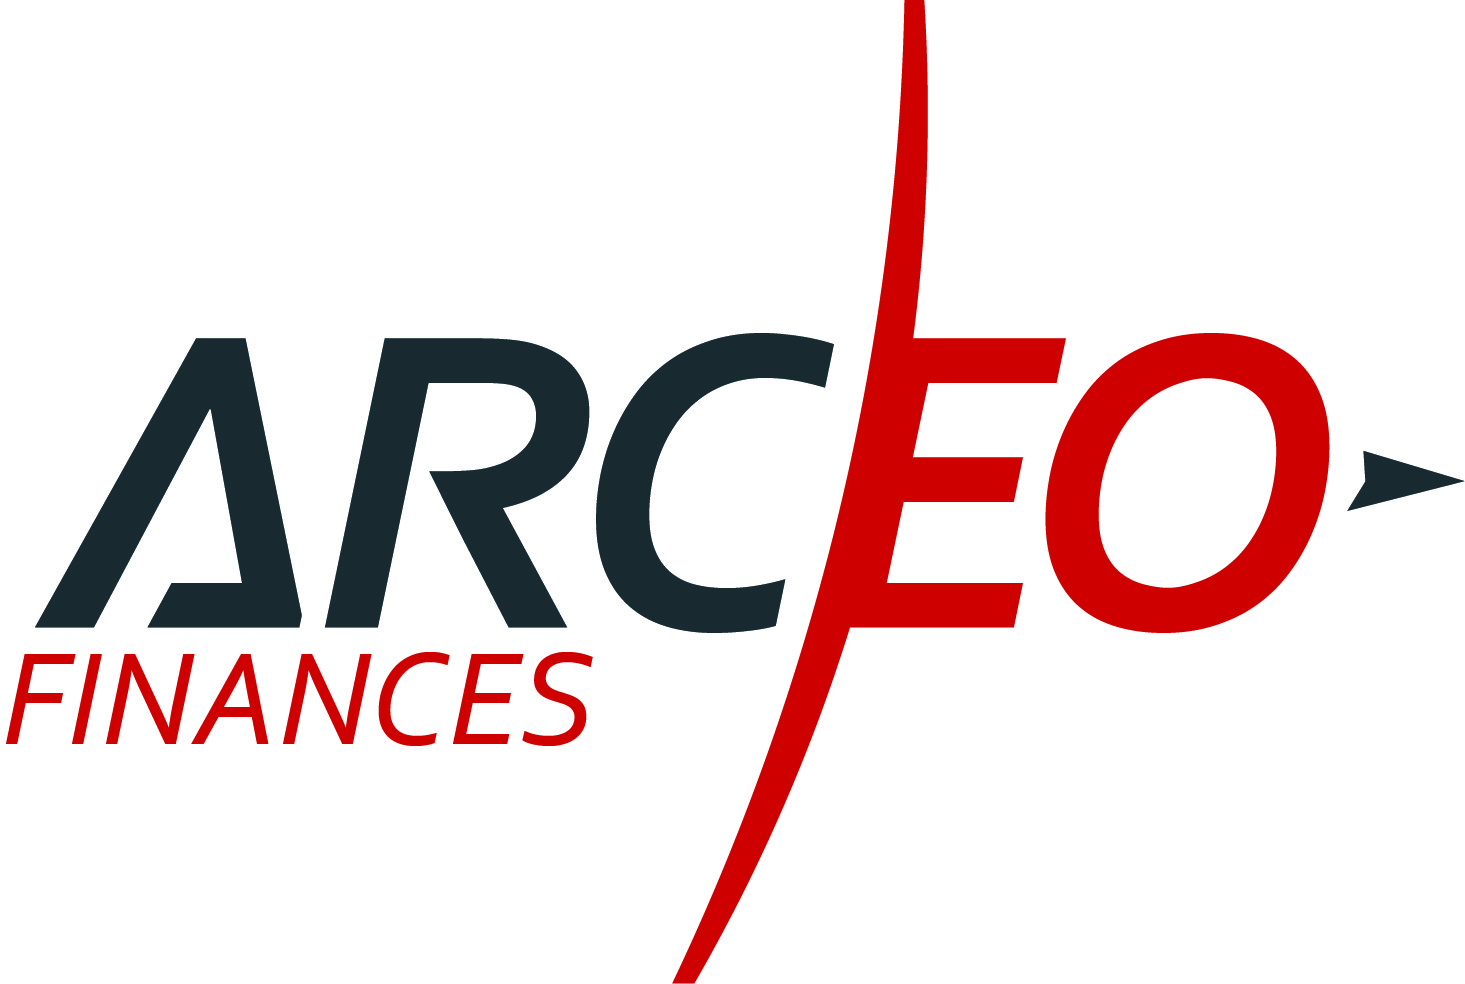 Arceo Finances